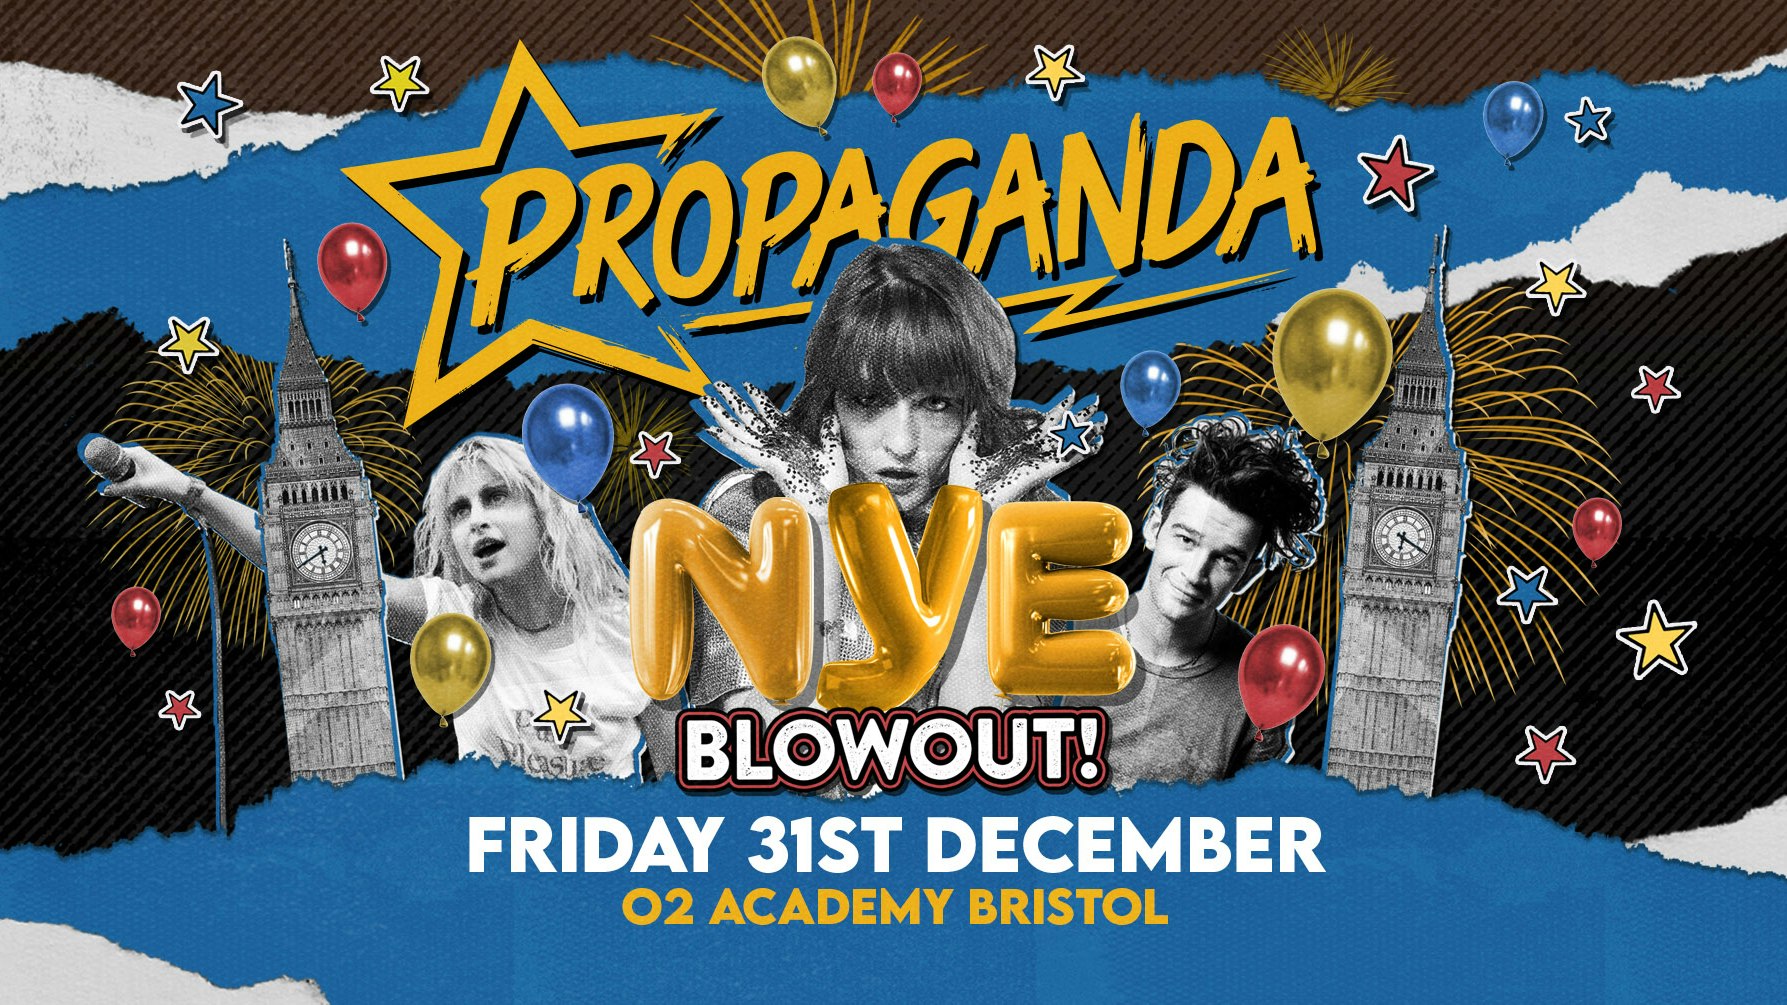 Propaganda Bristol – New Year’s Eve Blowout at the O2 Academy!